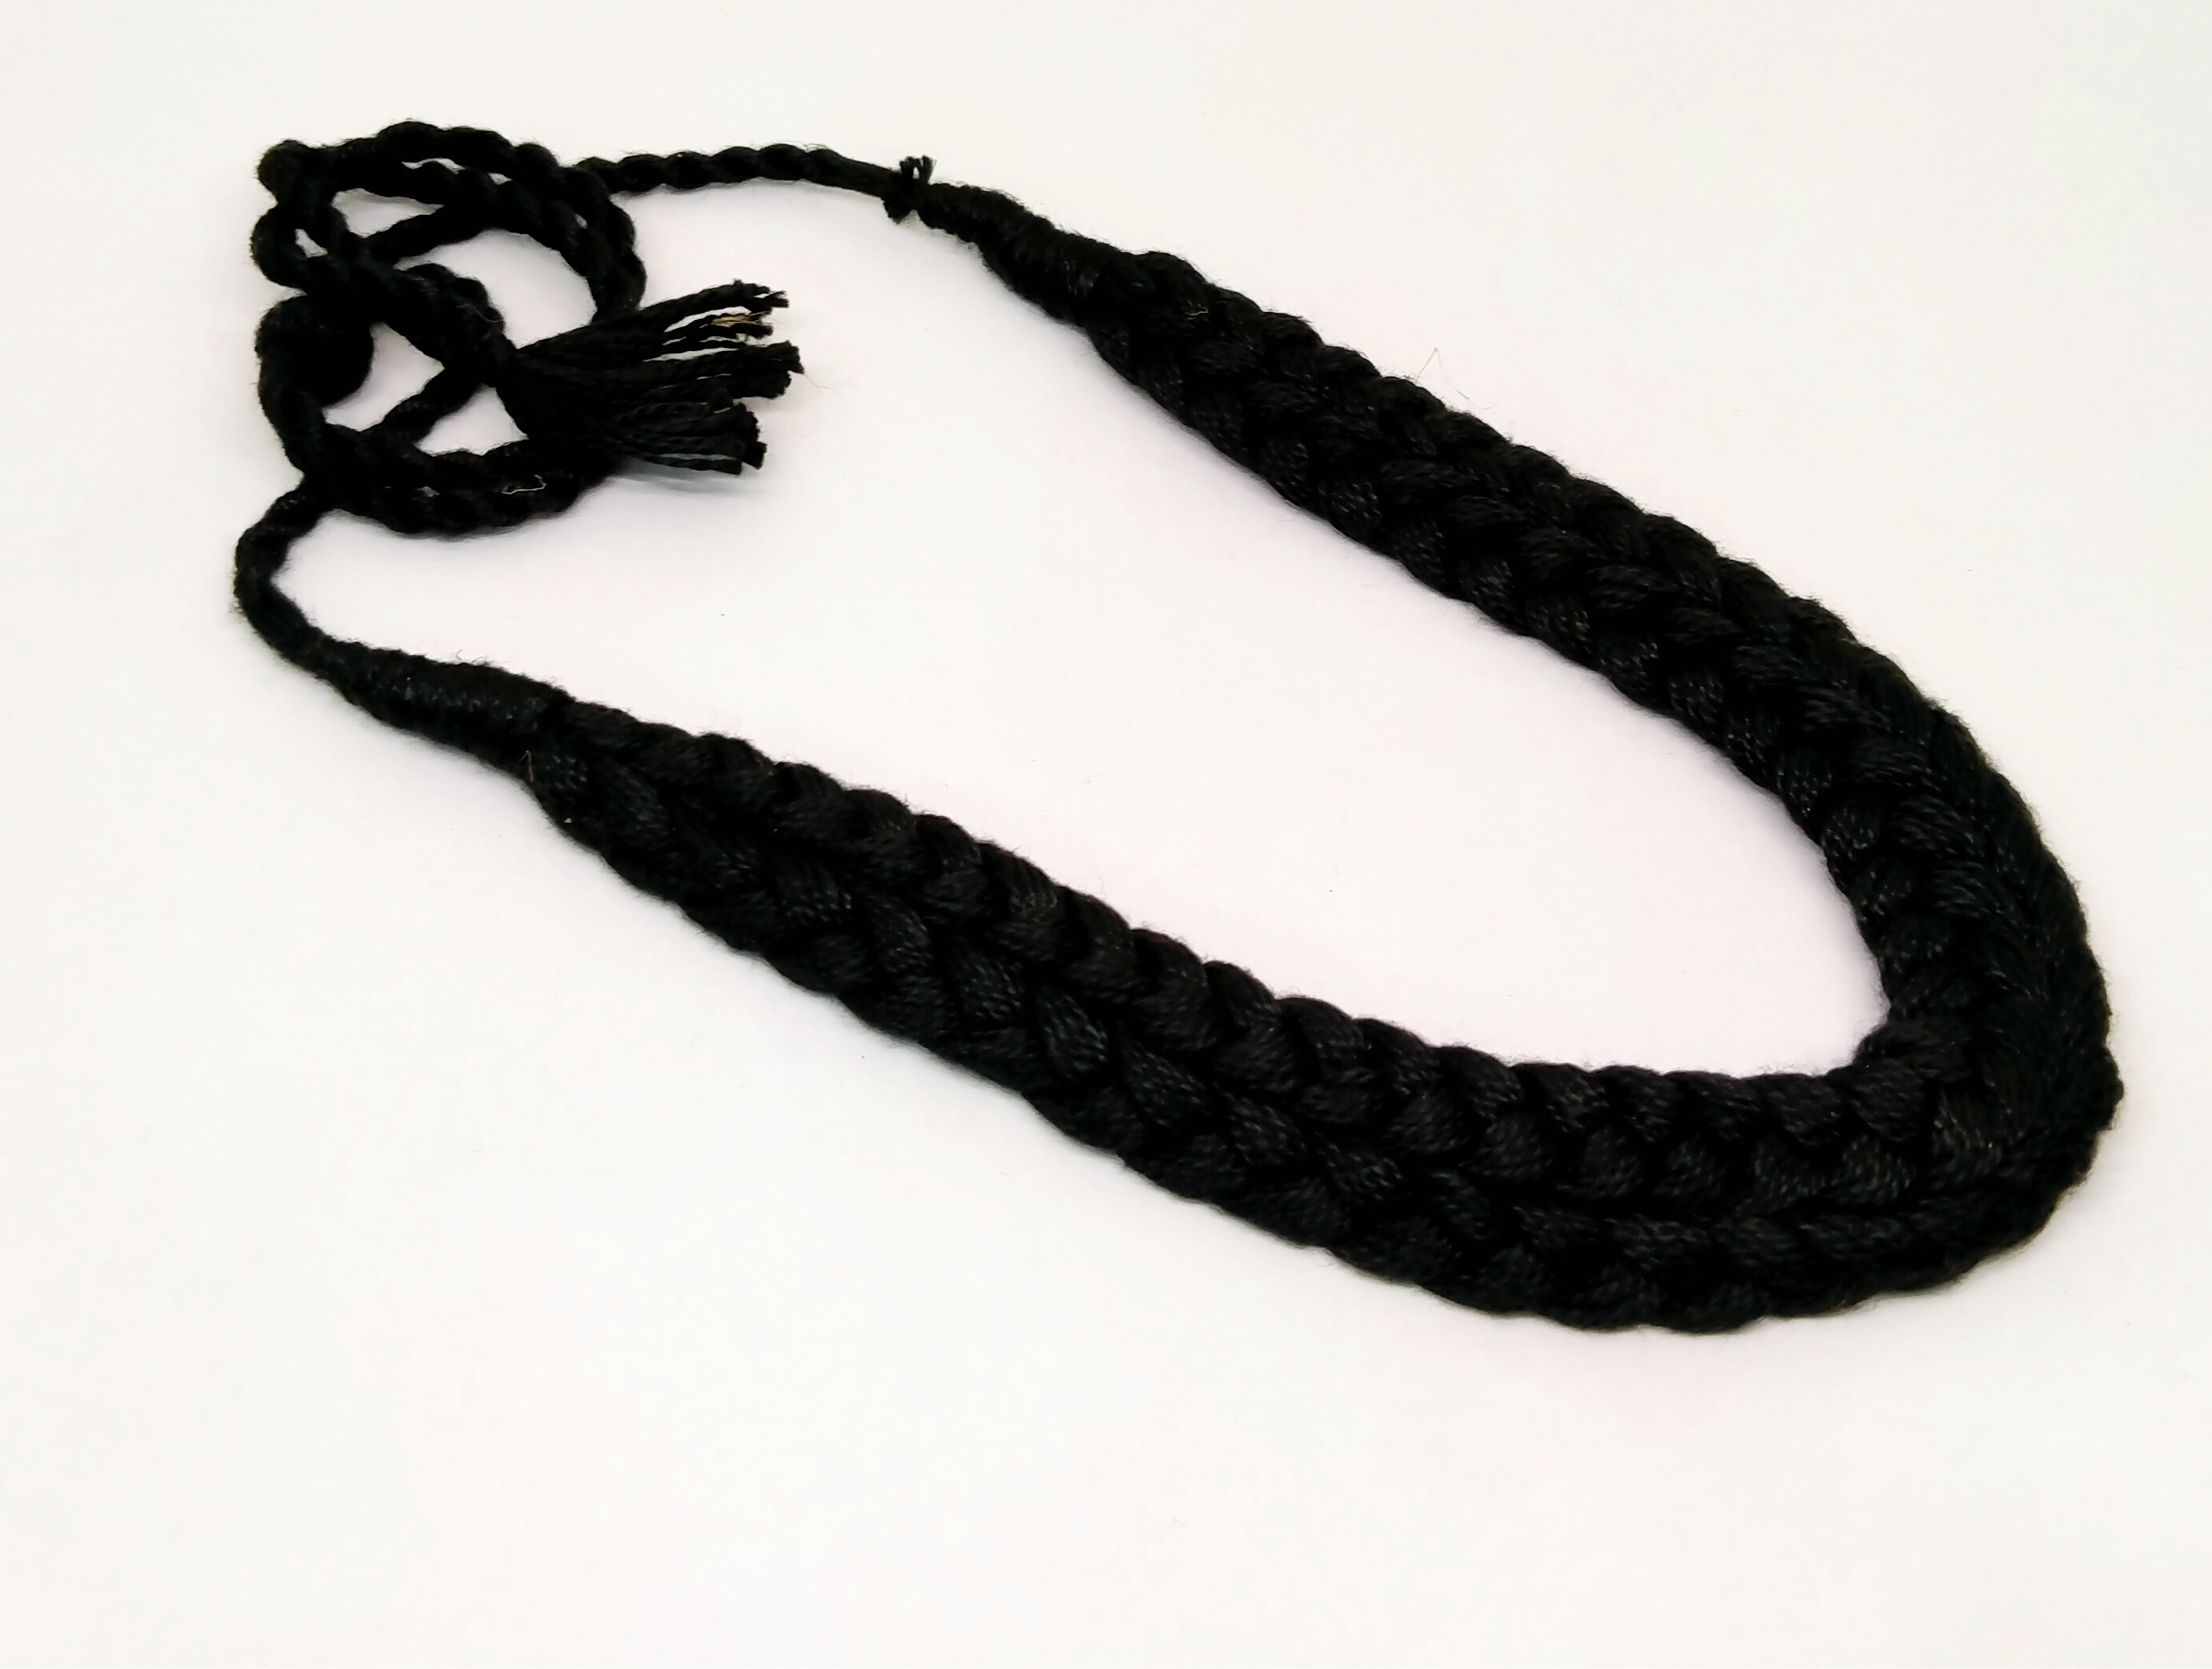 2pcs Necklace black cord rubber 3 mm 20 inch Jewelry Supply Bayonet Clasp  at Rs 1379.00 | नेकलेस एक्सेसरीज, हार का सहायक समान - Rajeshwar Impex,  Mumbai | ID: 2851665467255